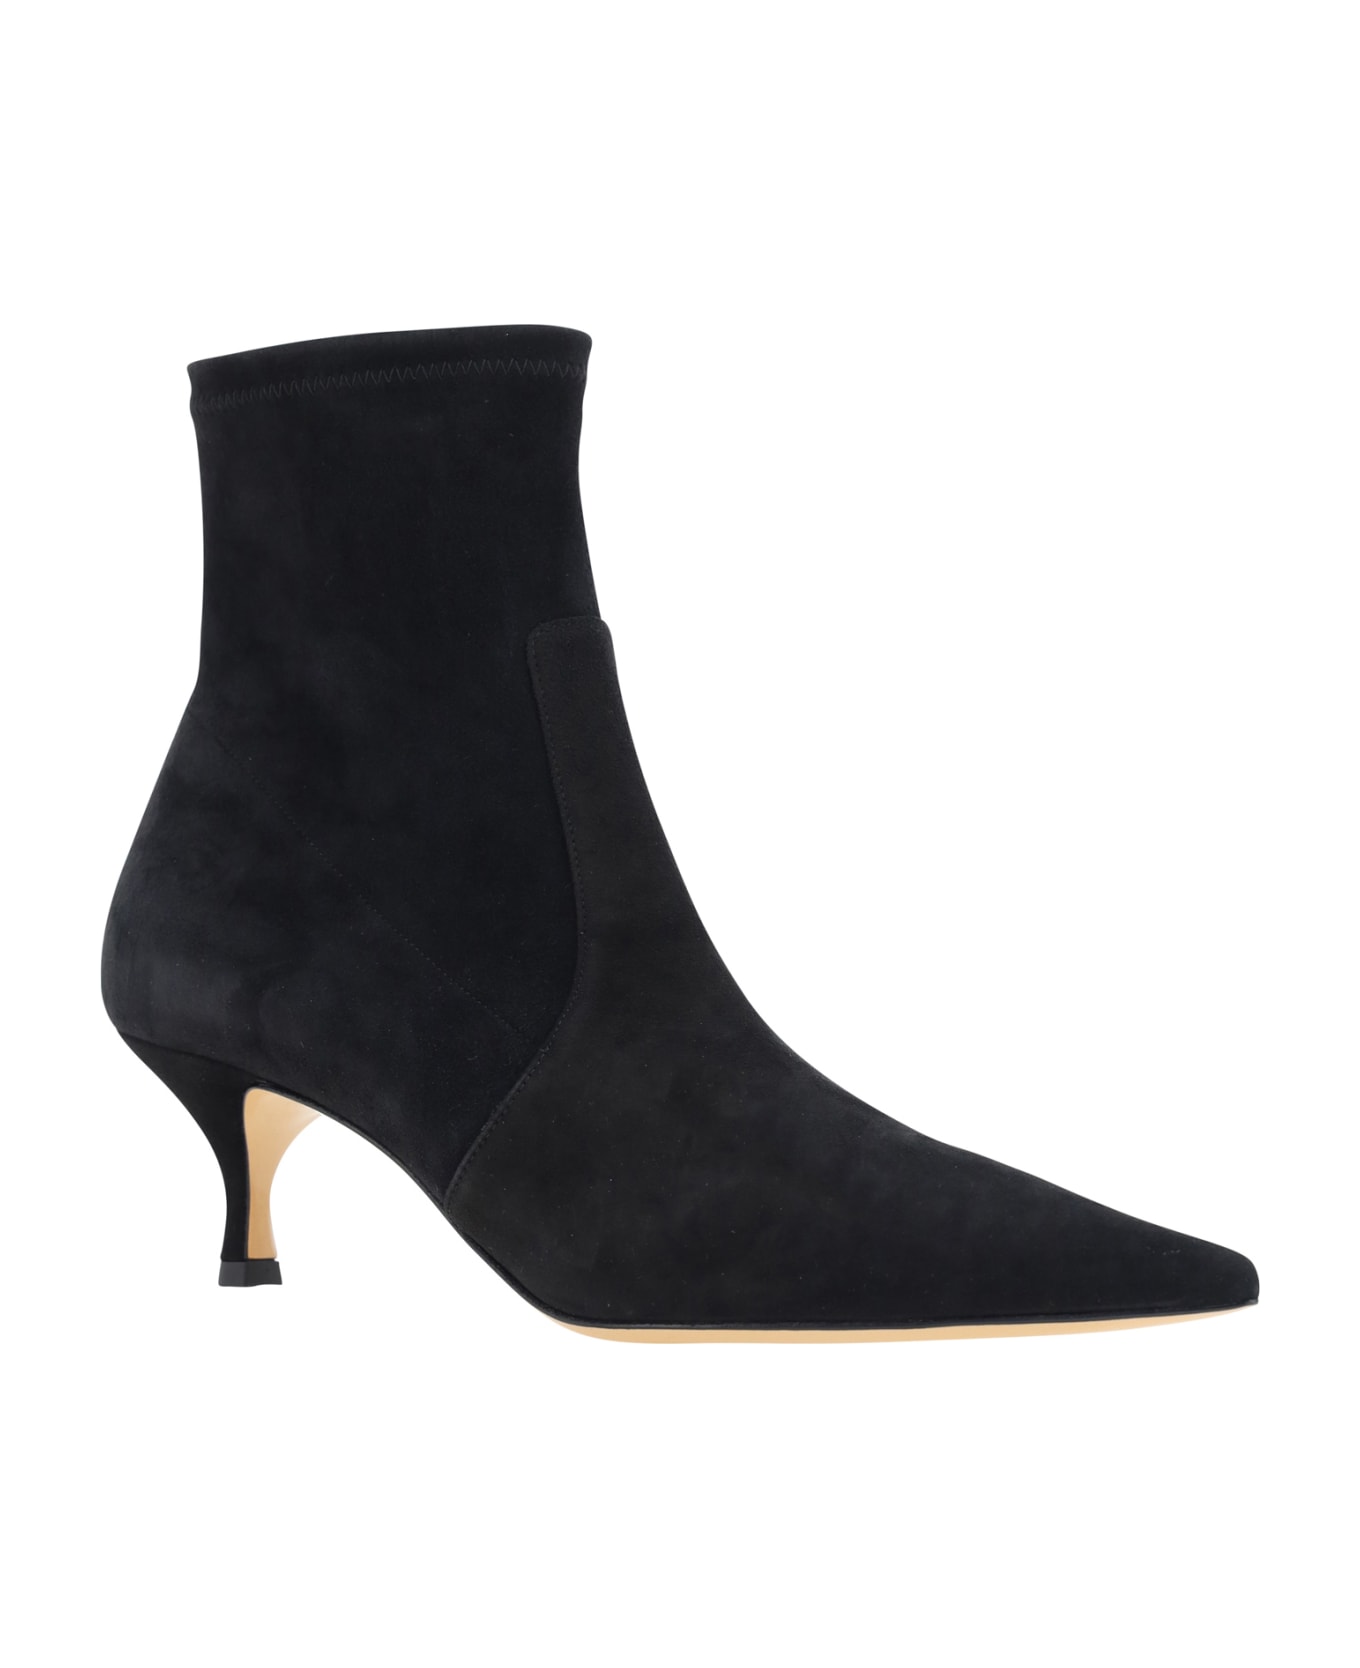 Casadei Heeled Boots - Black